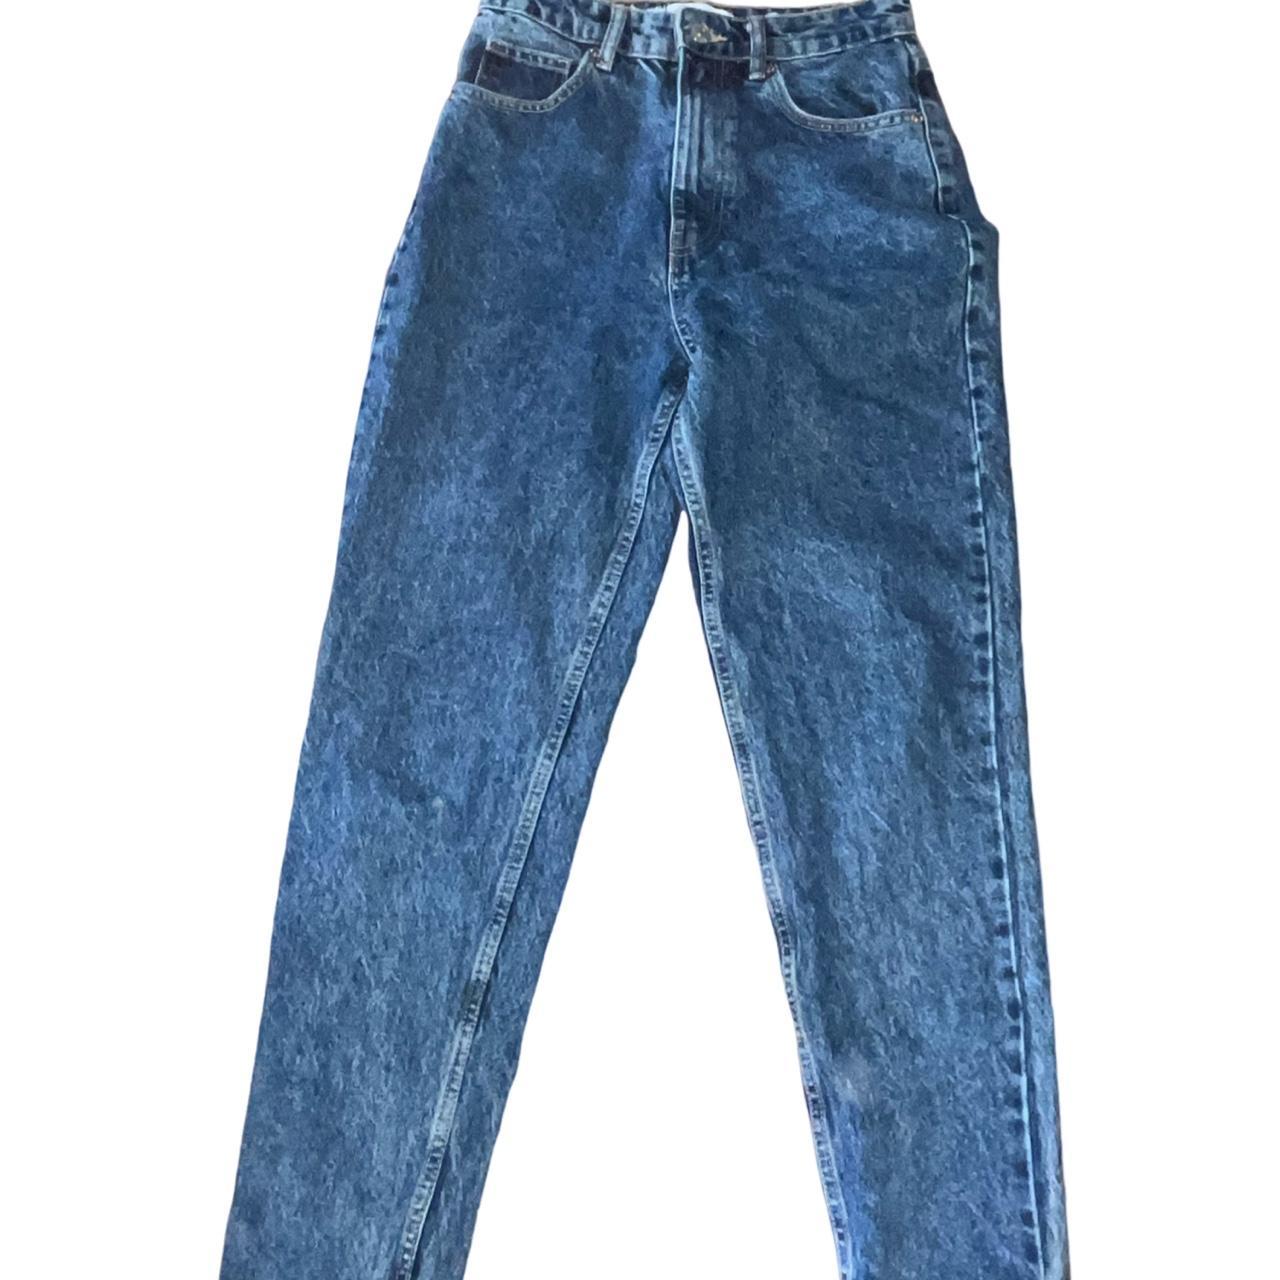 Brand: Zara Size 4 #boho #jeans no stretch dark... - Depop